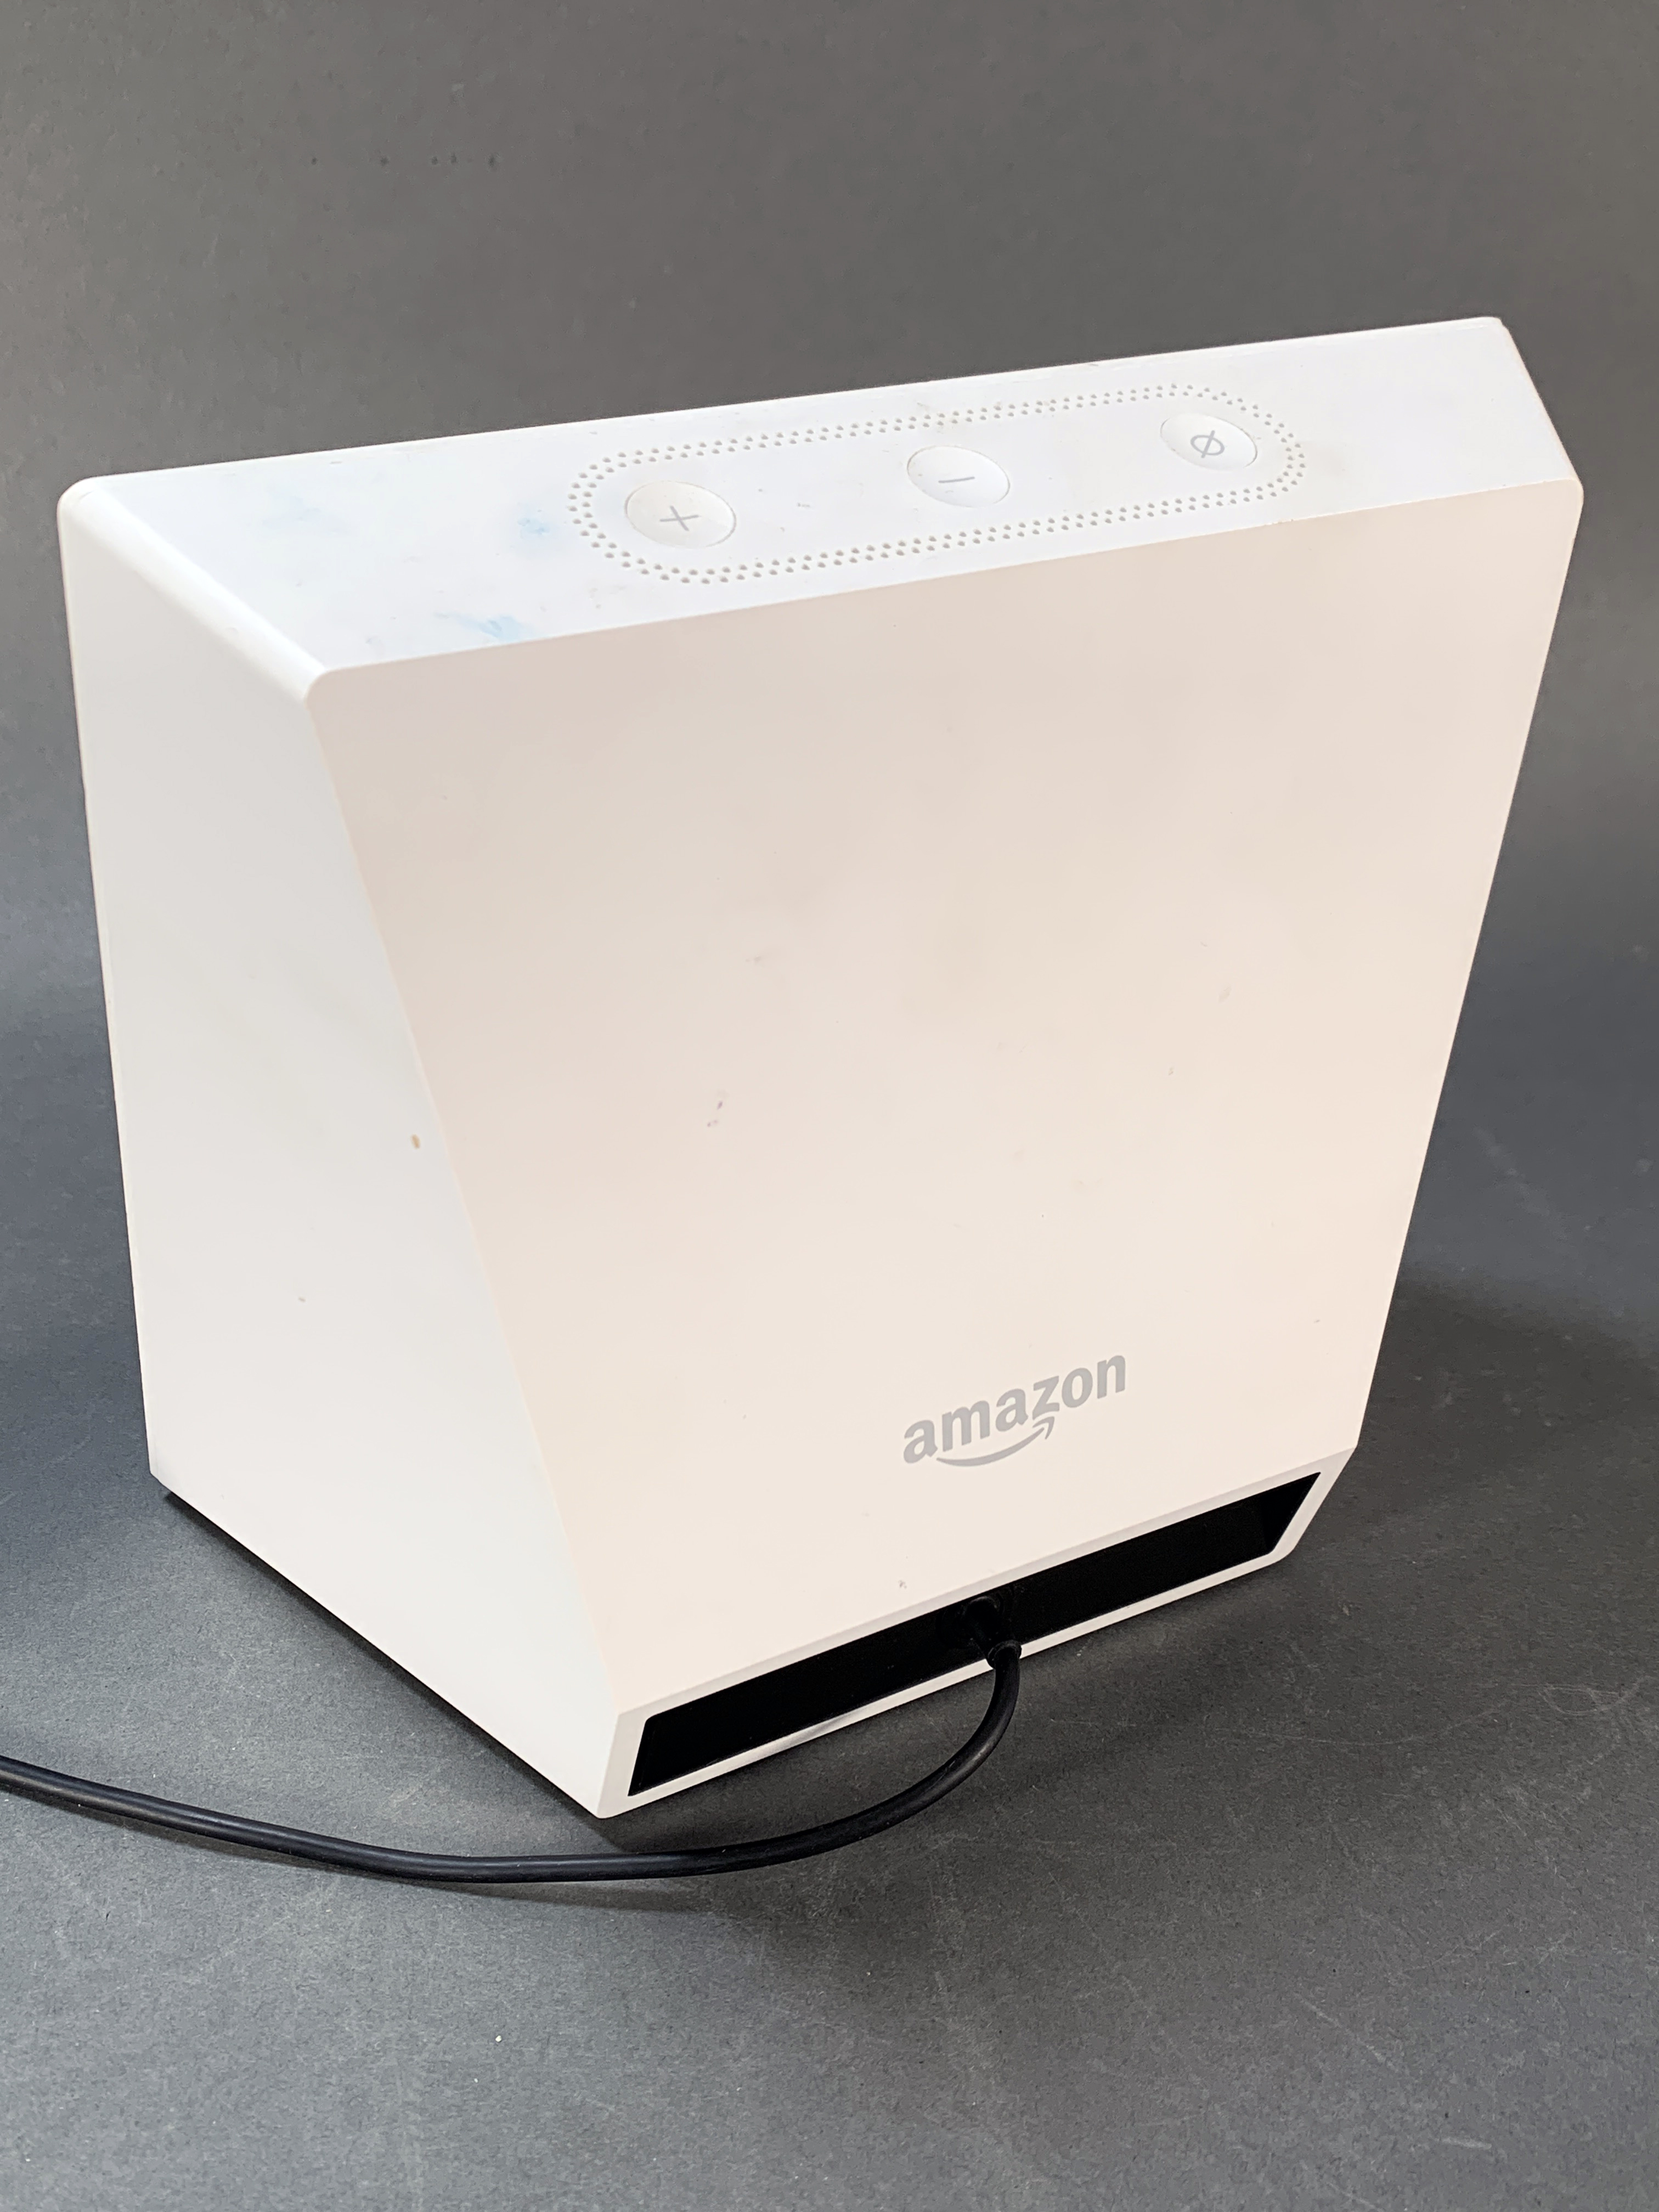 Amazon Echo Show 1st Generation Bluetooth Speaker image 2